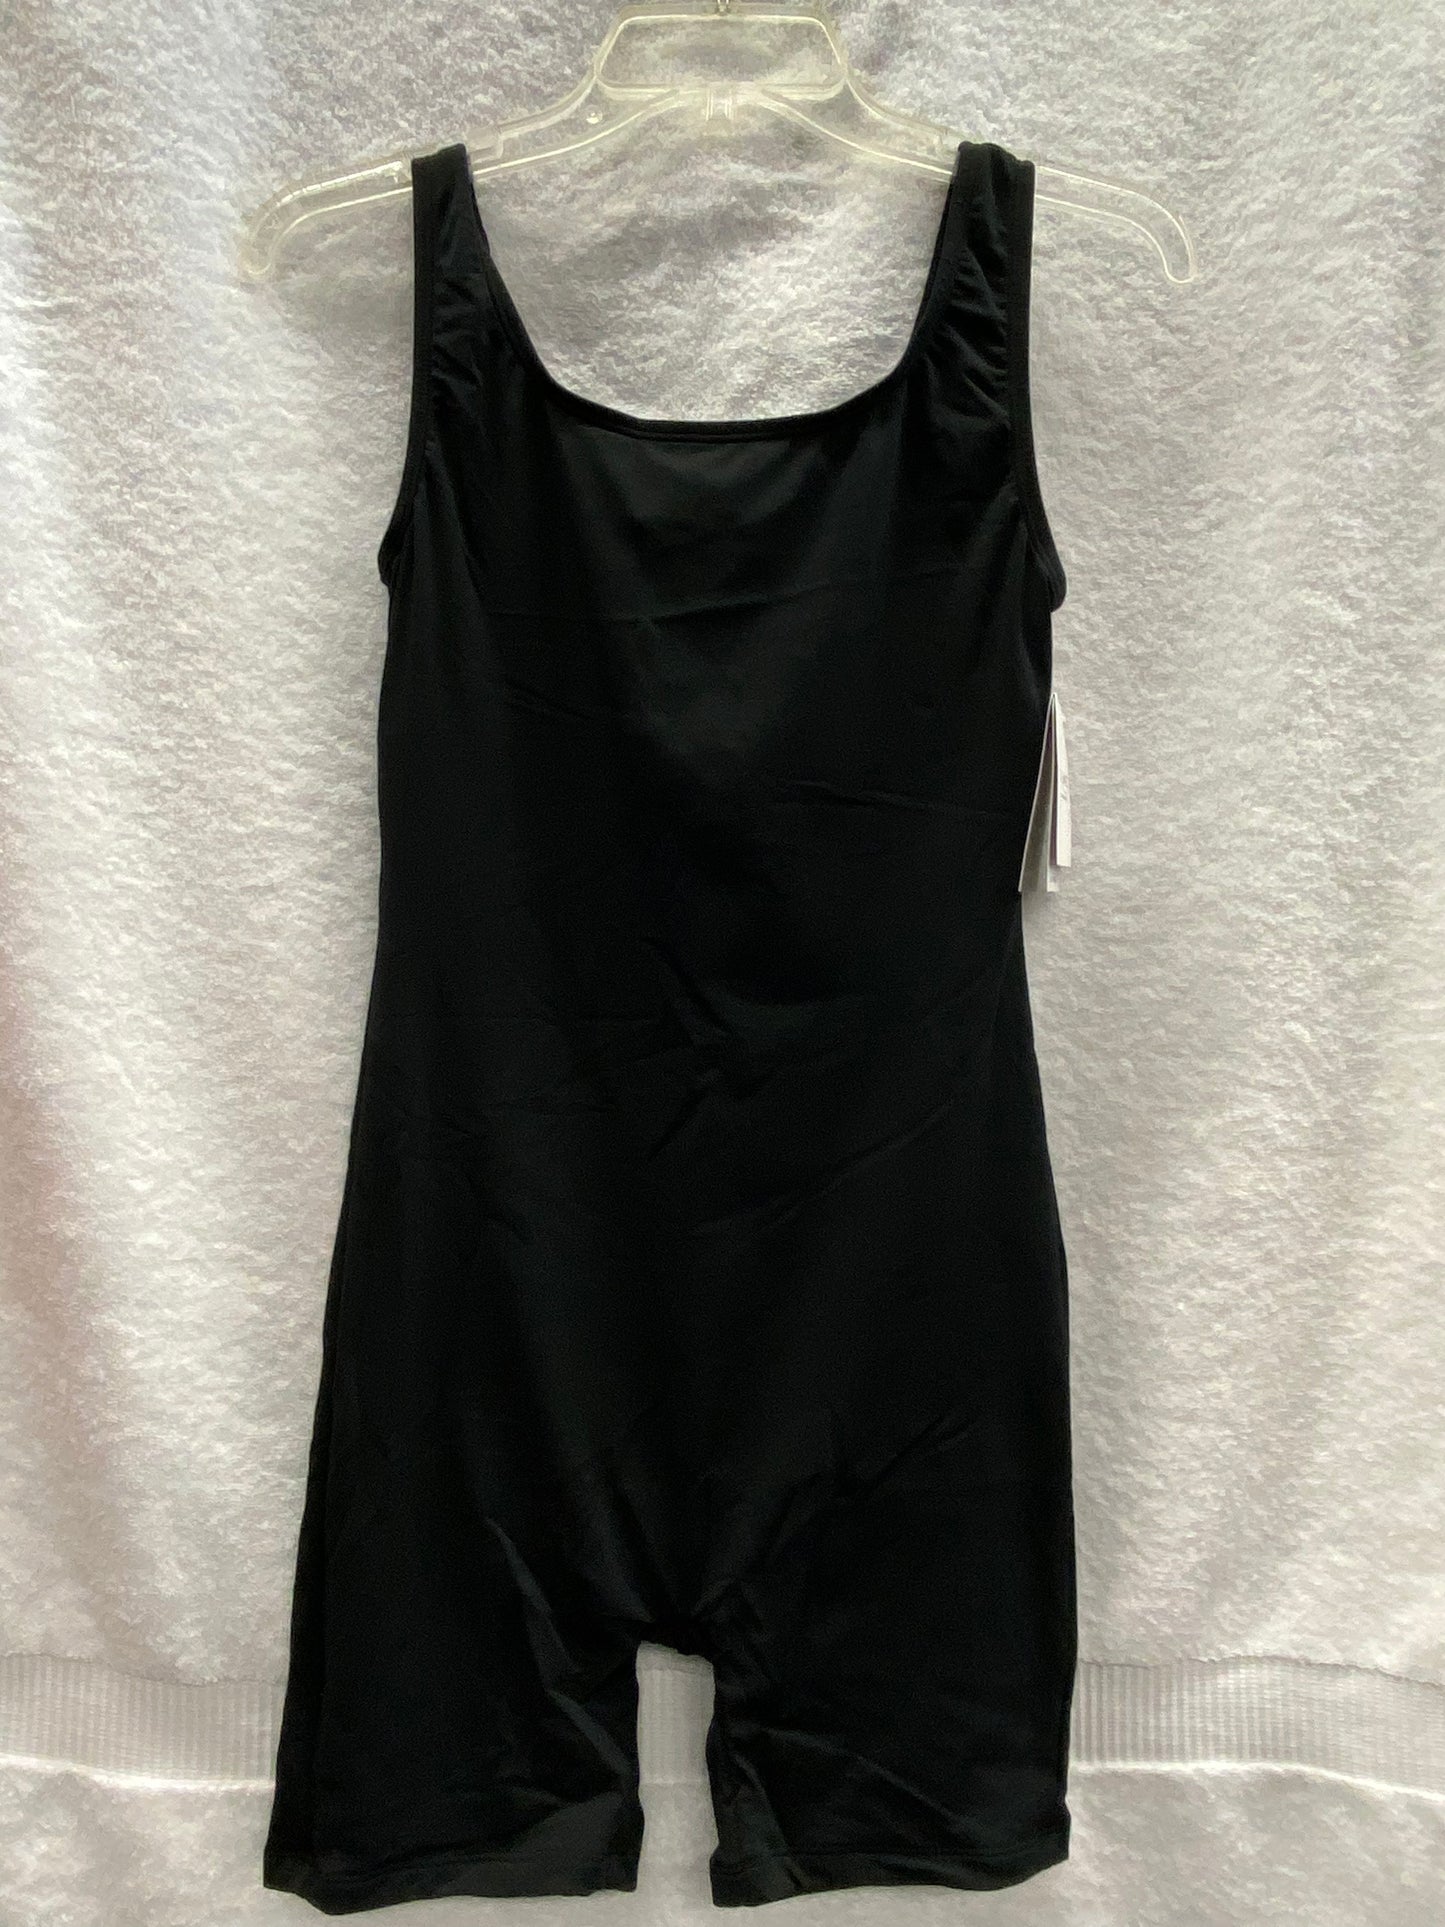 Dolfin Black Aquatic Fitness Instructor Suit Size 10